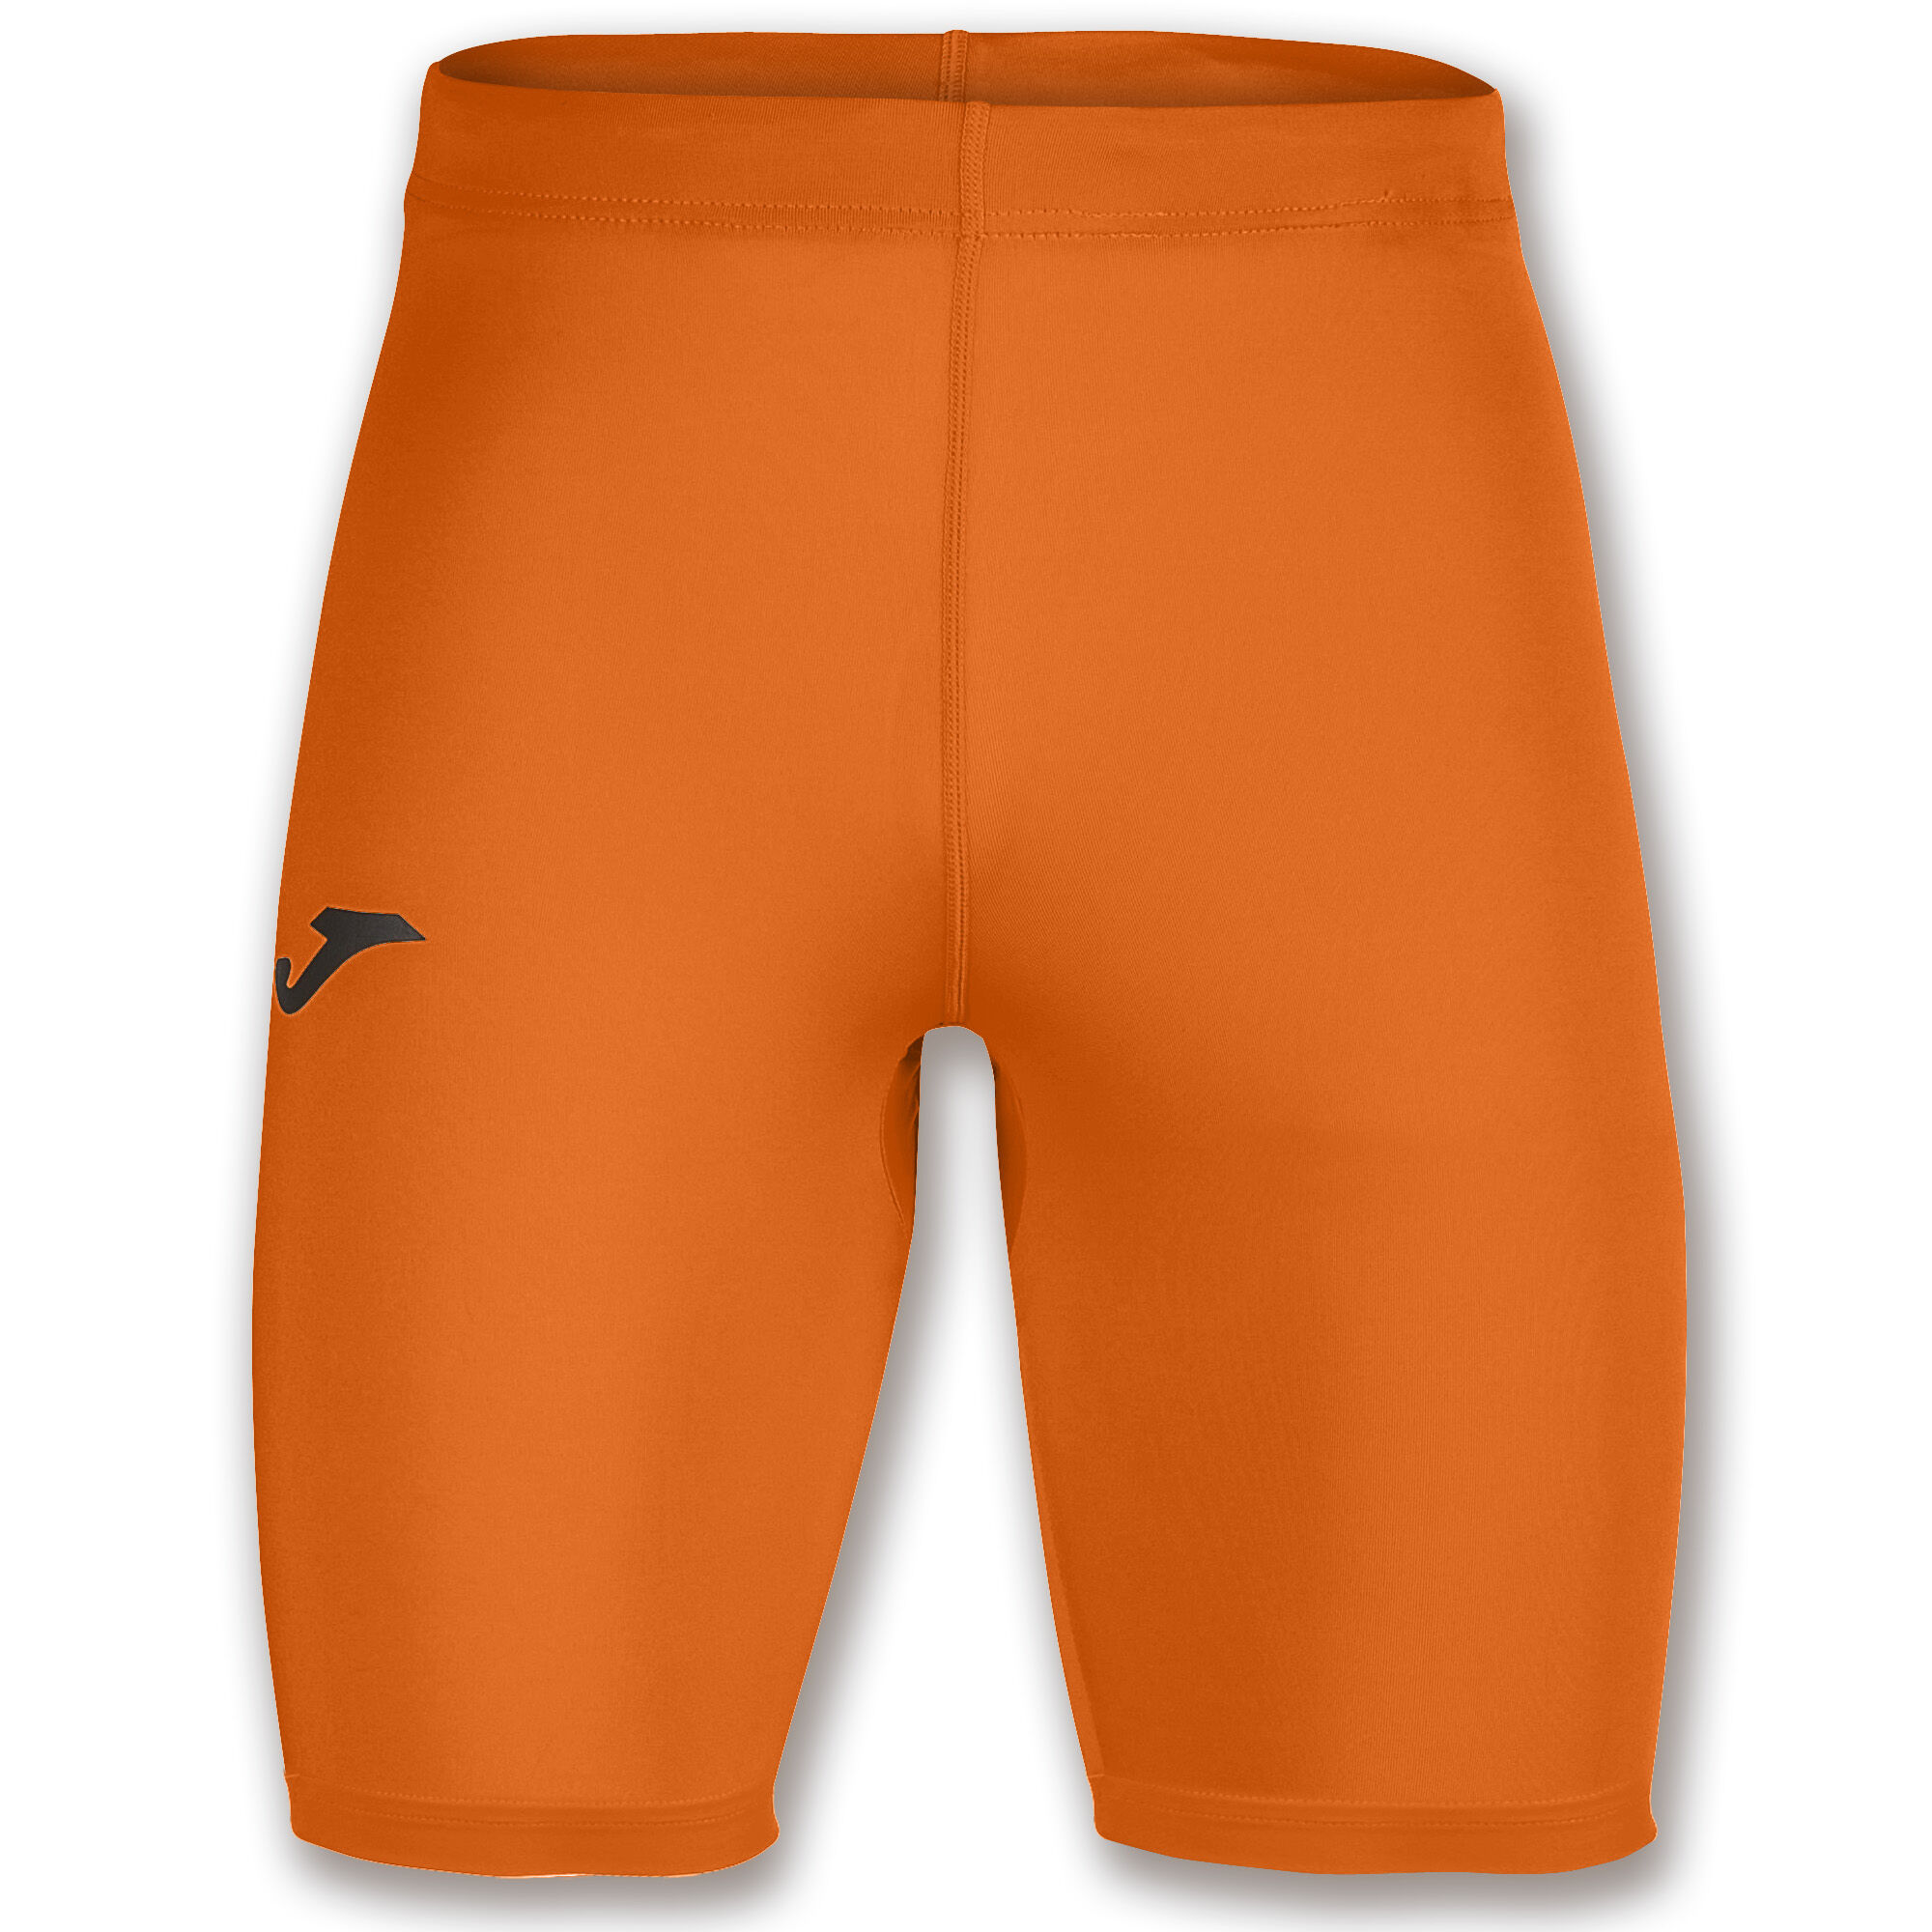 Pantaloncini aderenti uomo Brama Academy arancione